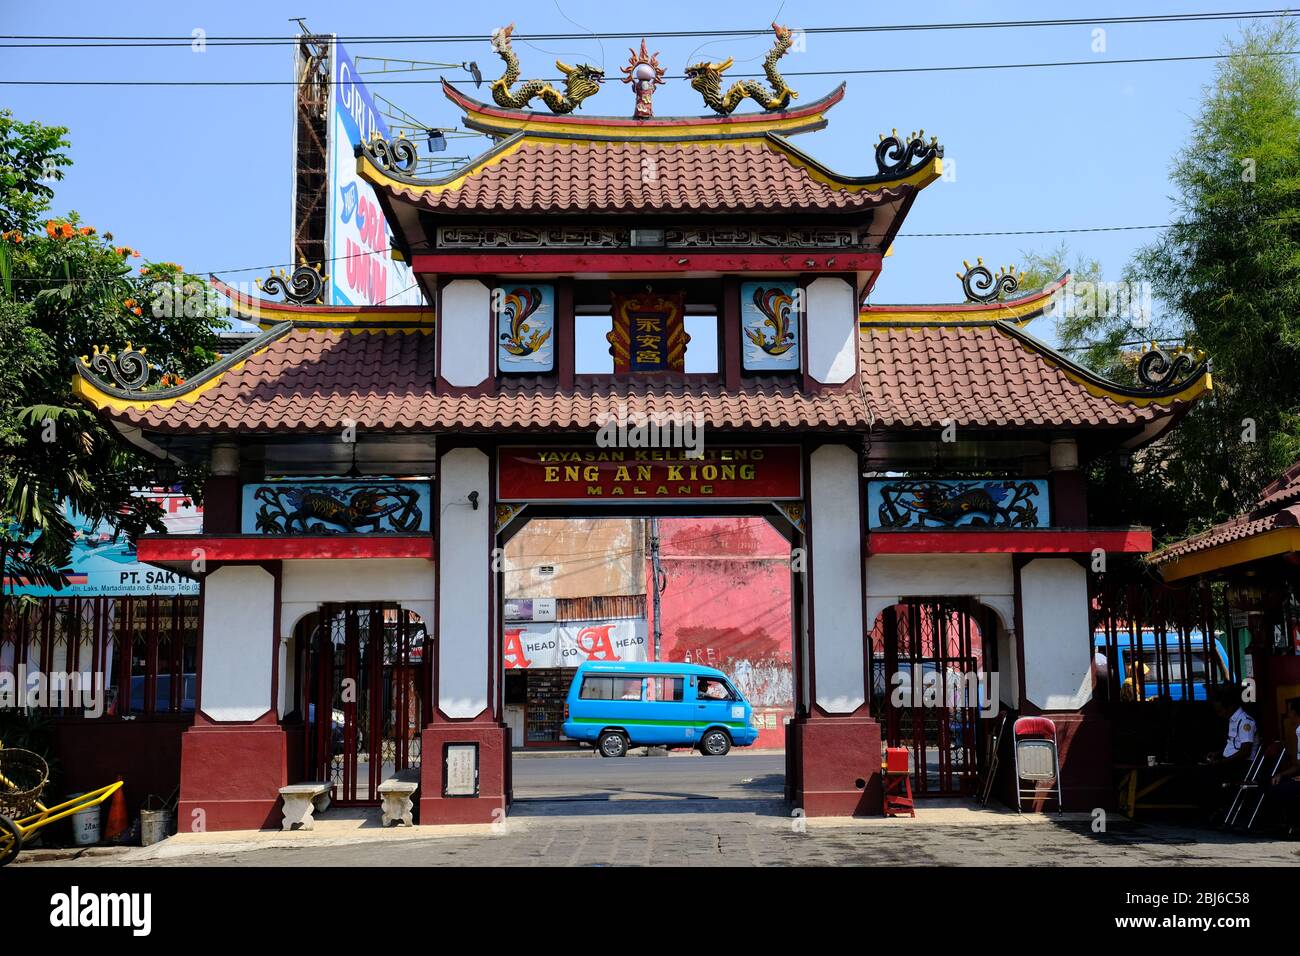 Malang Indonesia - Eng An Kiong Templo puerta Foto de stock